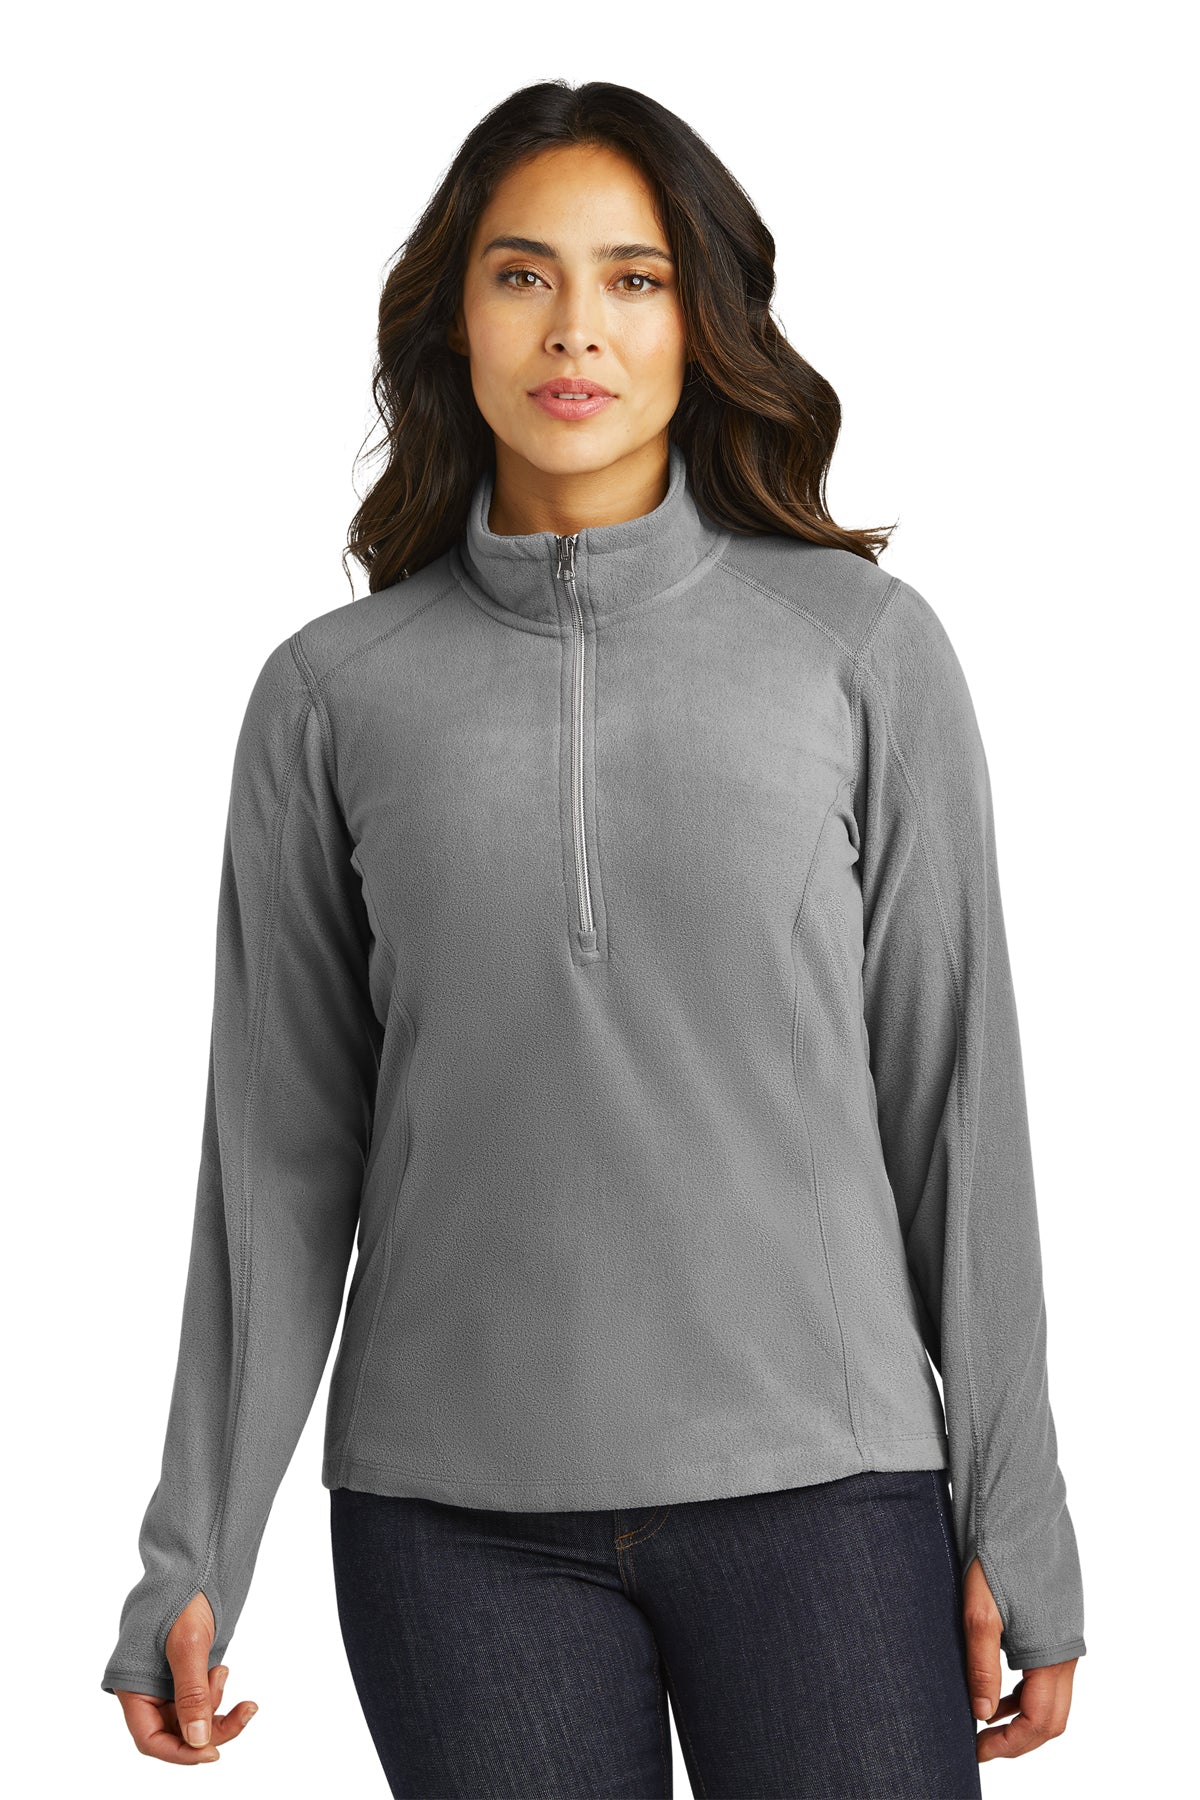 Port Authority® L224 Ladies Microfleece 1/2-Zip Pullover Pearl Grey